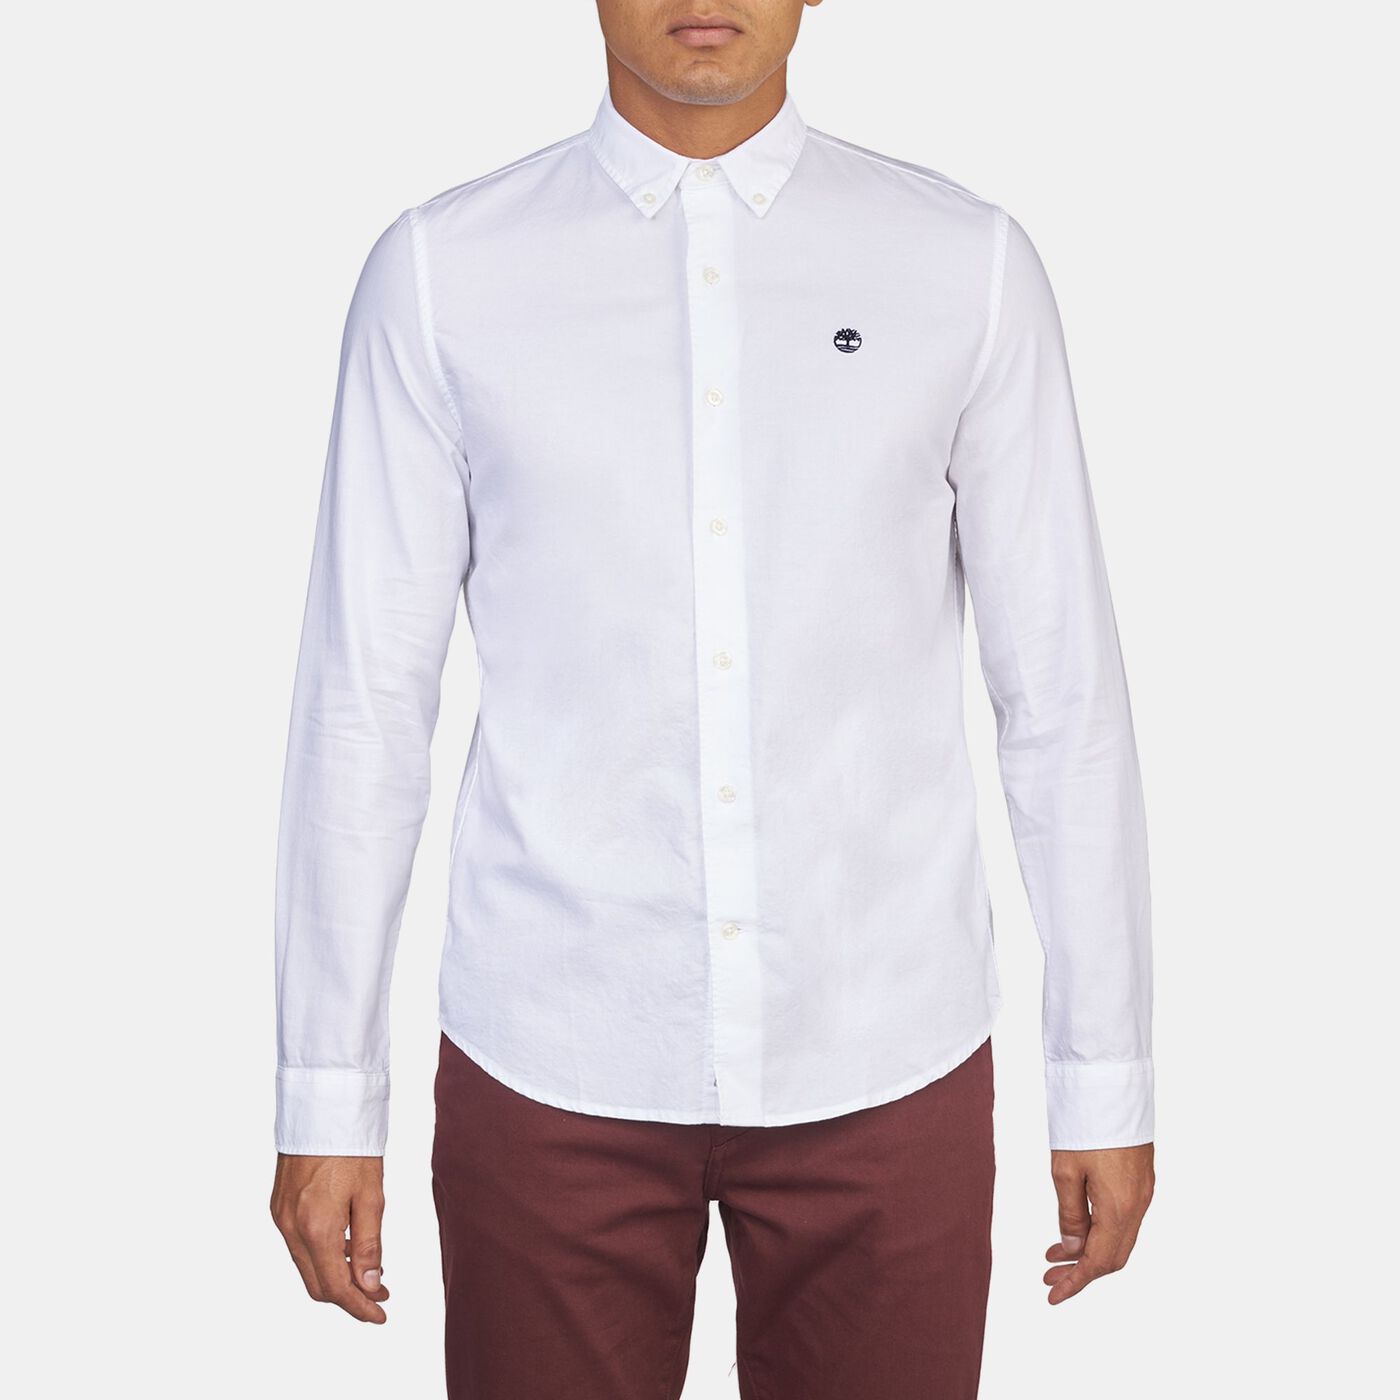 Men's Rattle River Oxford Long-Sleeved Shirt